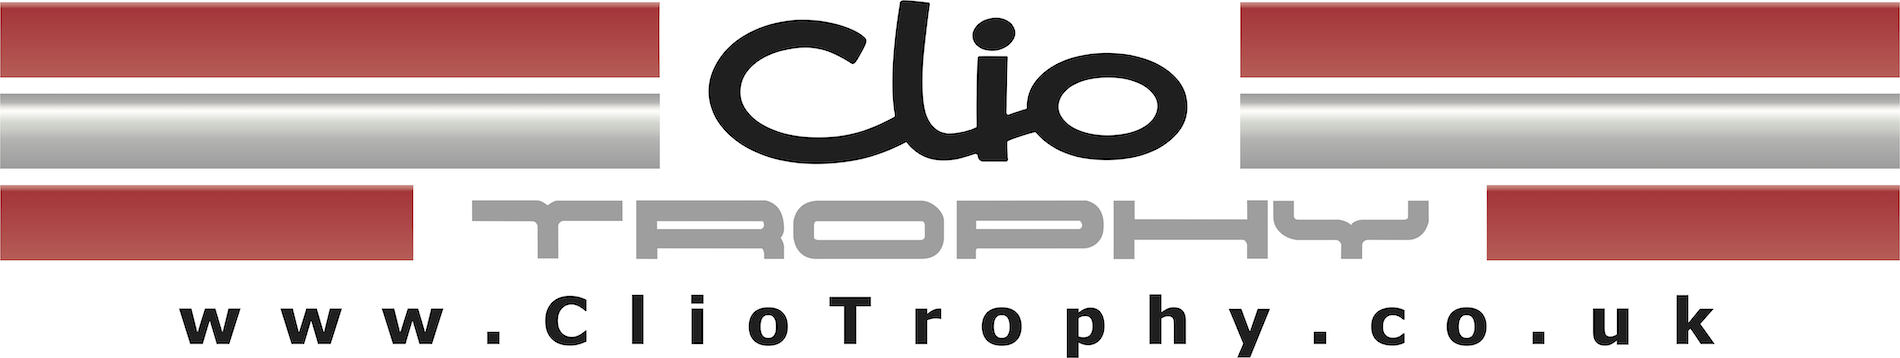 Cliotrophy.co.uk Merchandise Store